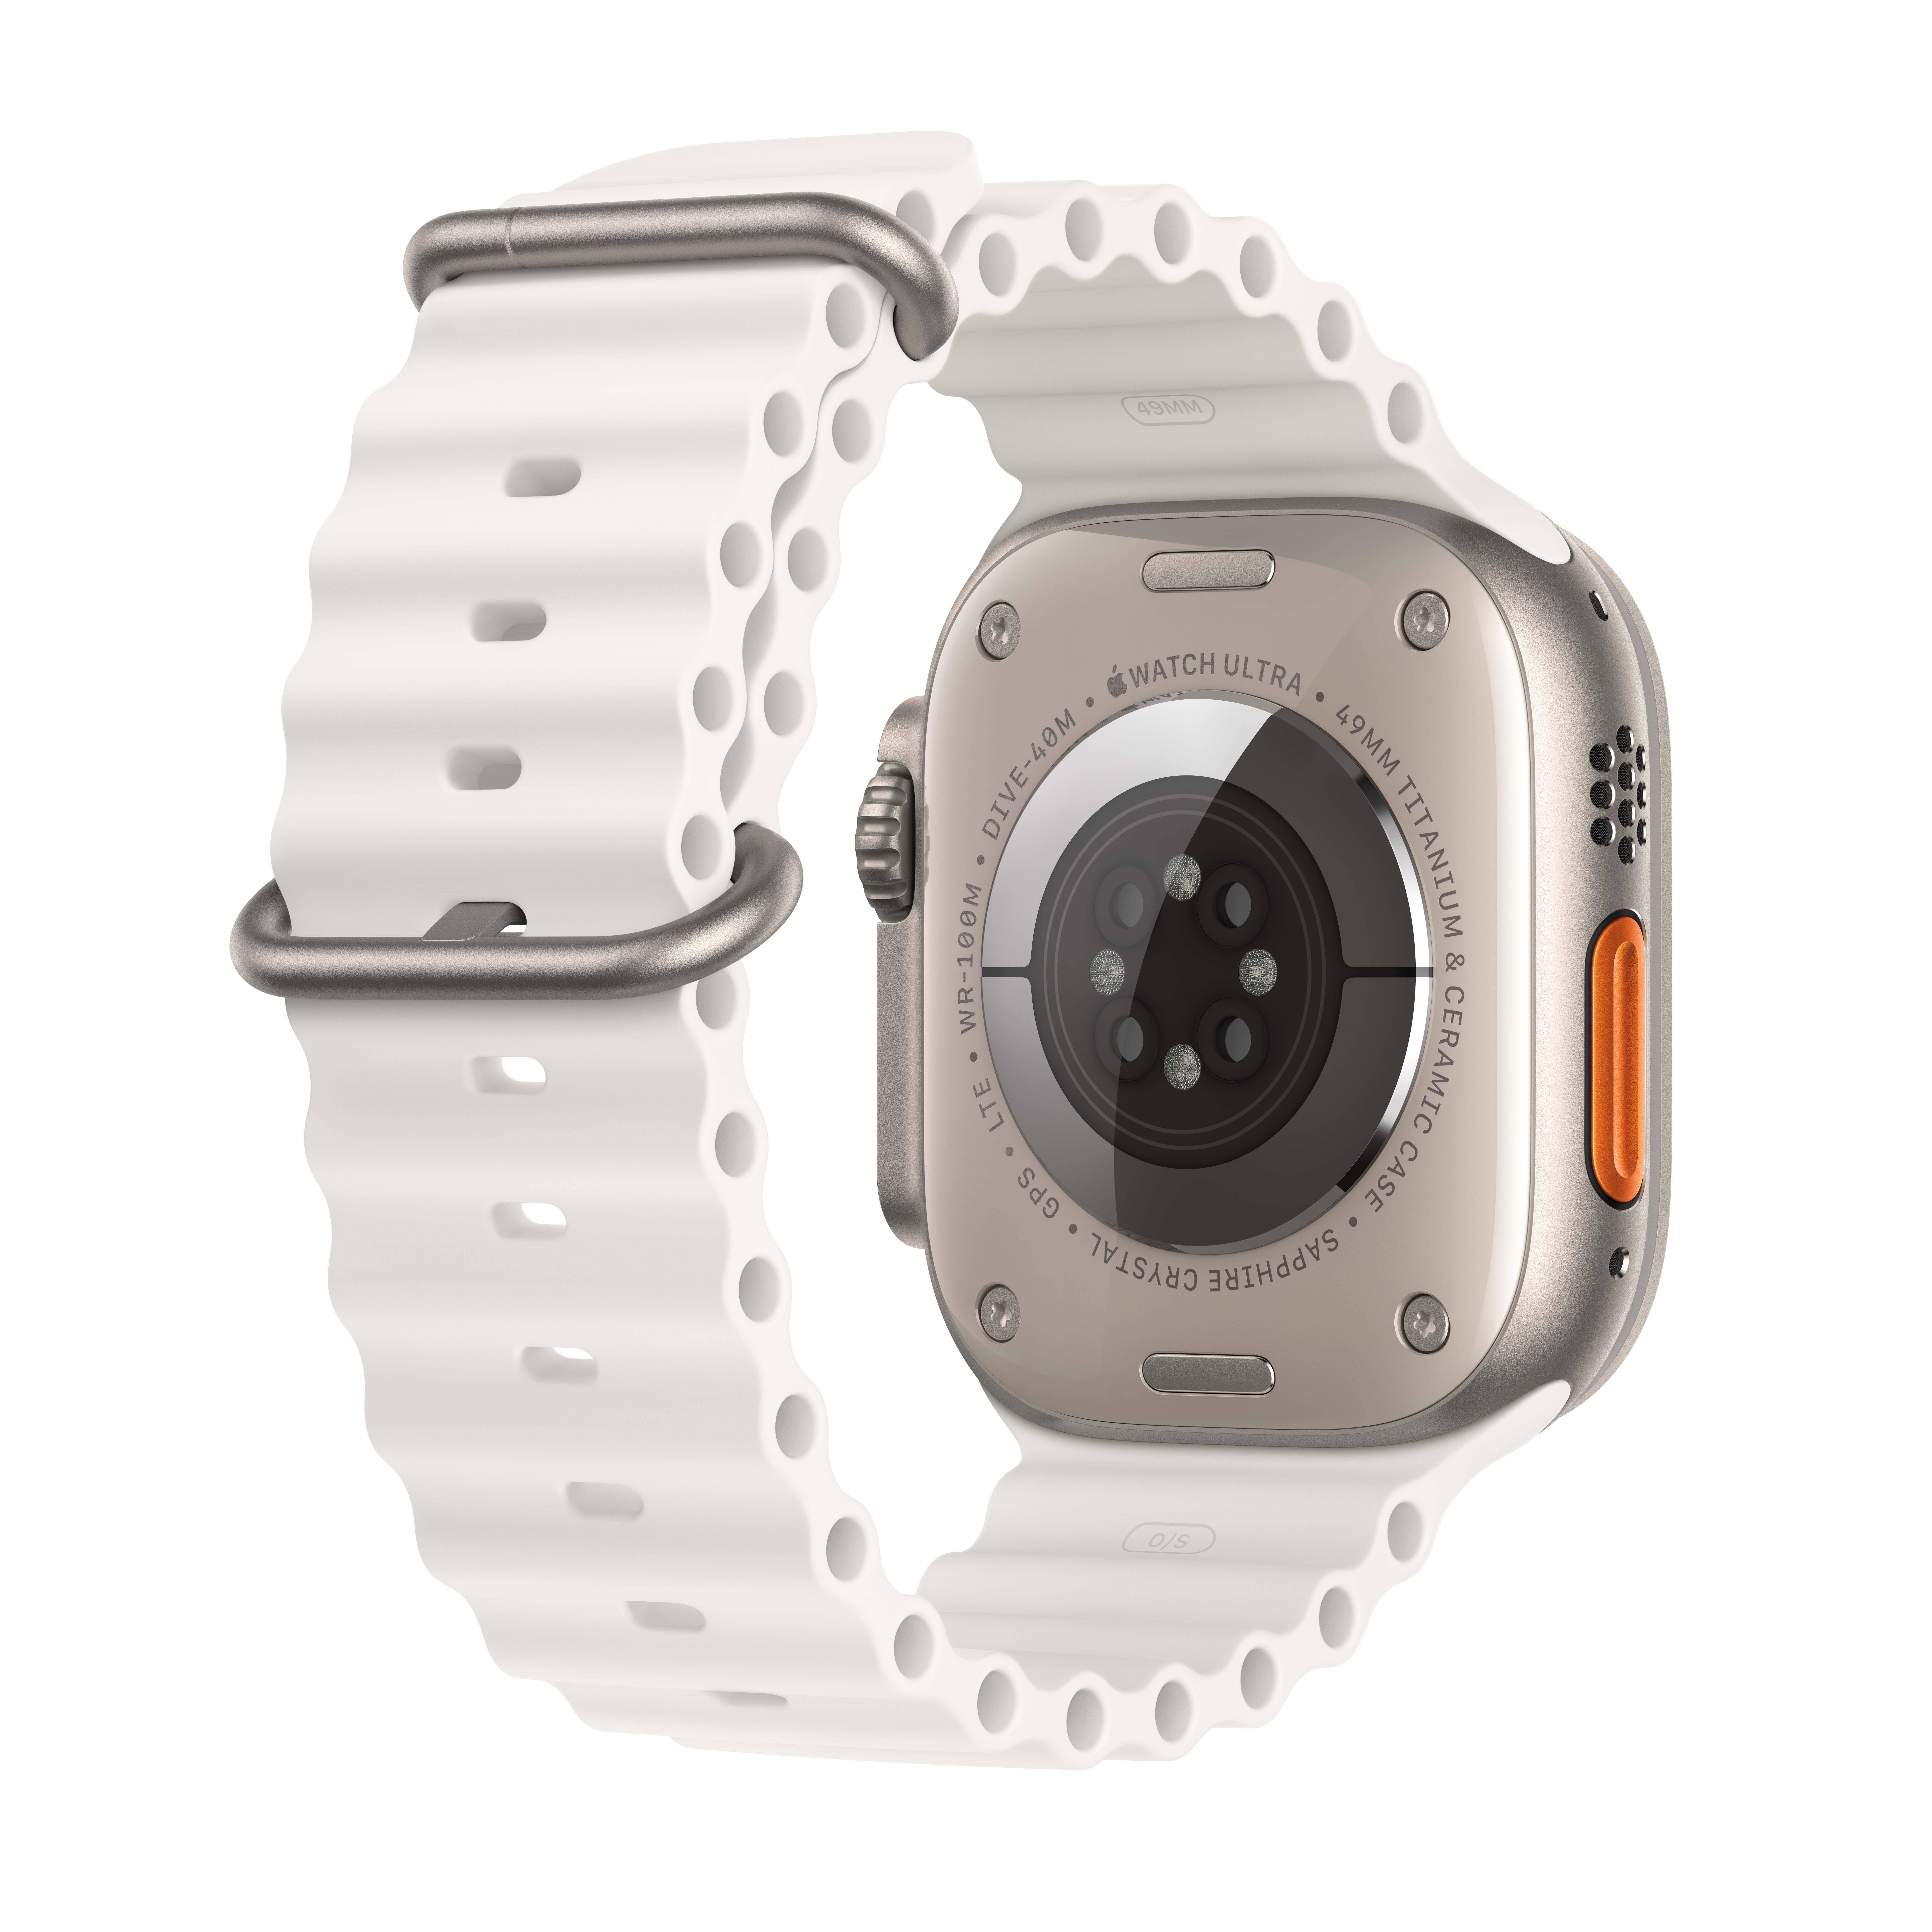 Apple Watch Ocean band